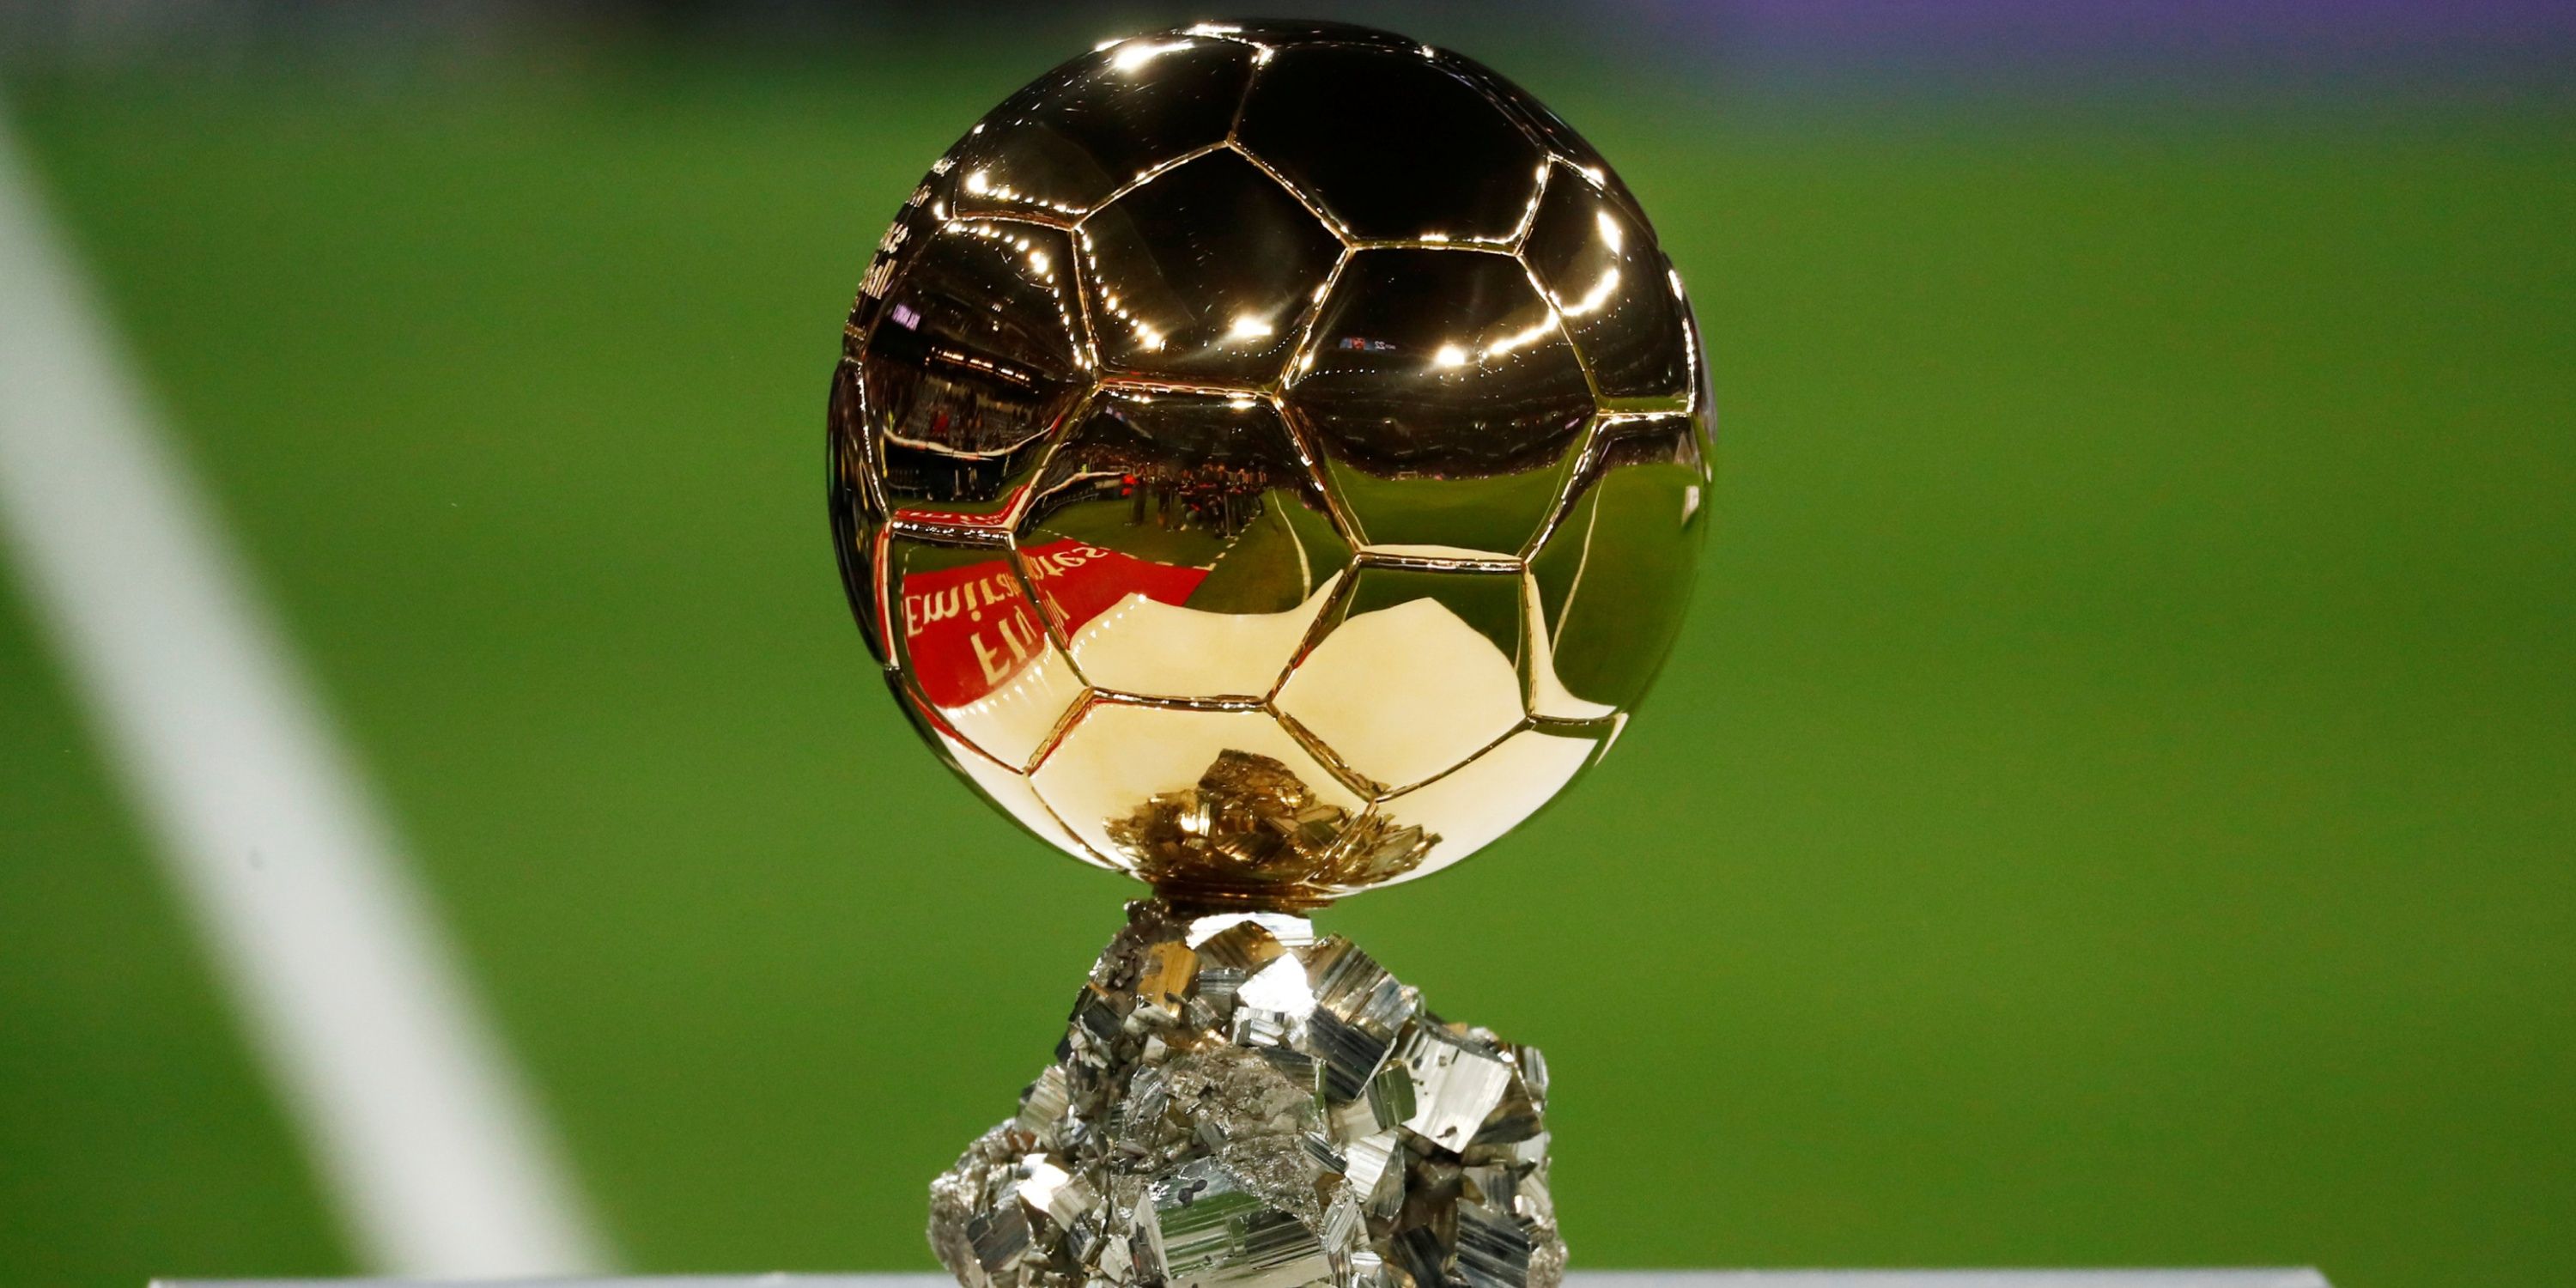 The Ballon d'Or trophy